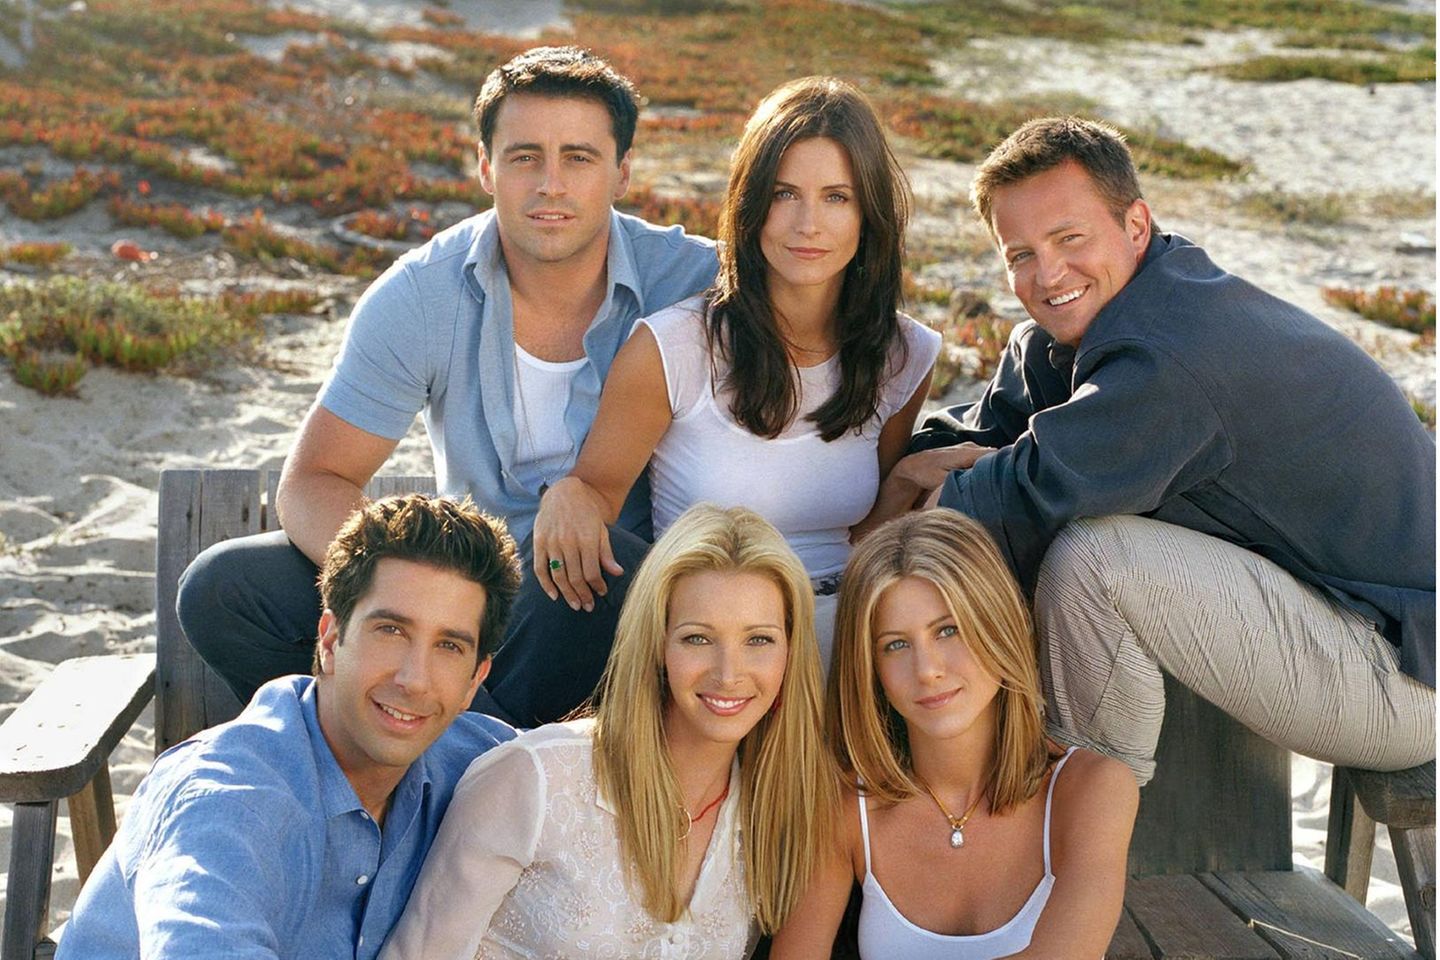 "Friends": Matt LeBlanc, Courteney Cox Arquette, Matthew Perry, Jennifer Aniston, Lisa Kudrow, David Schwimmer